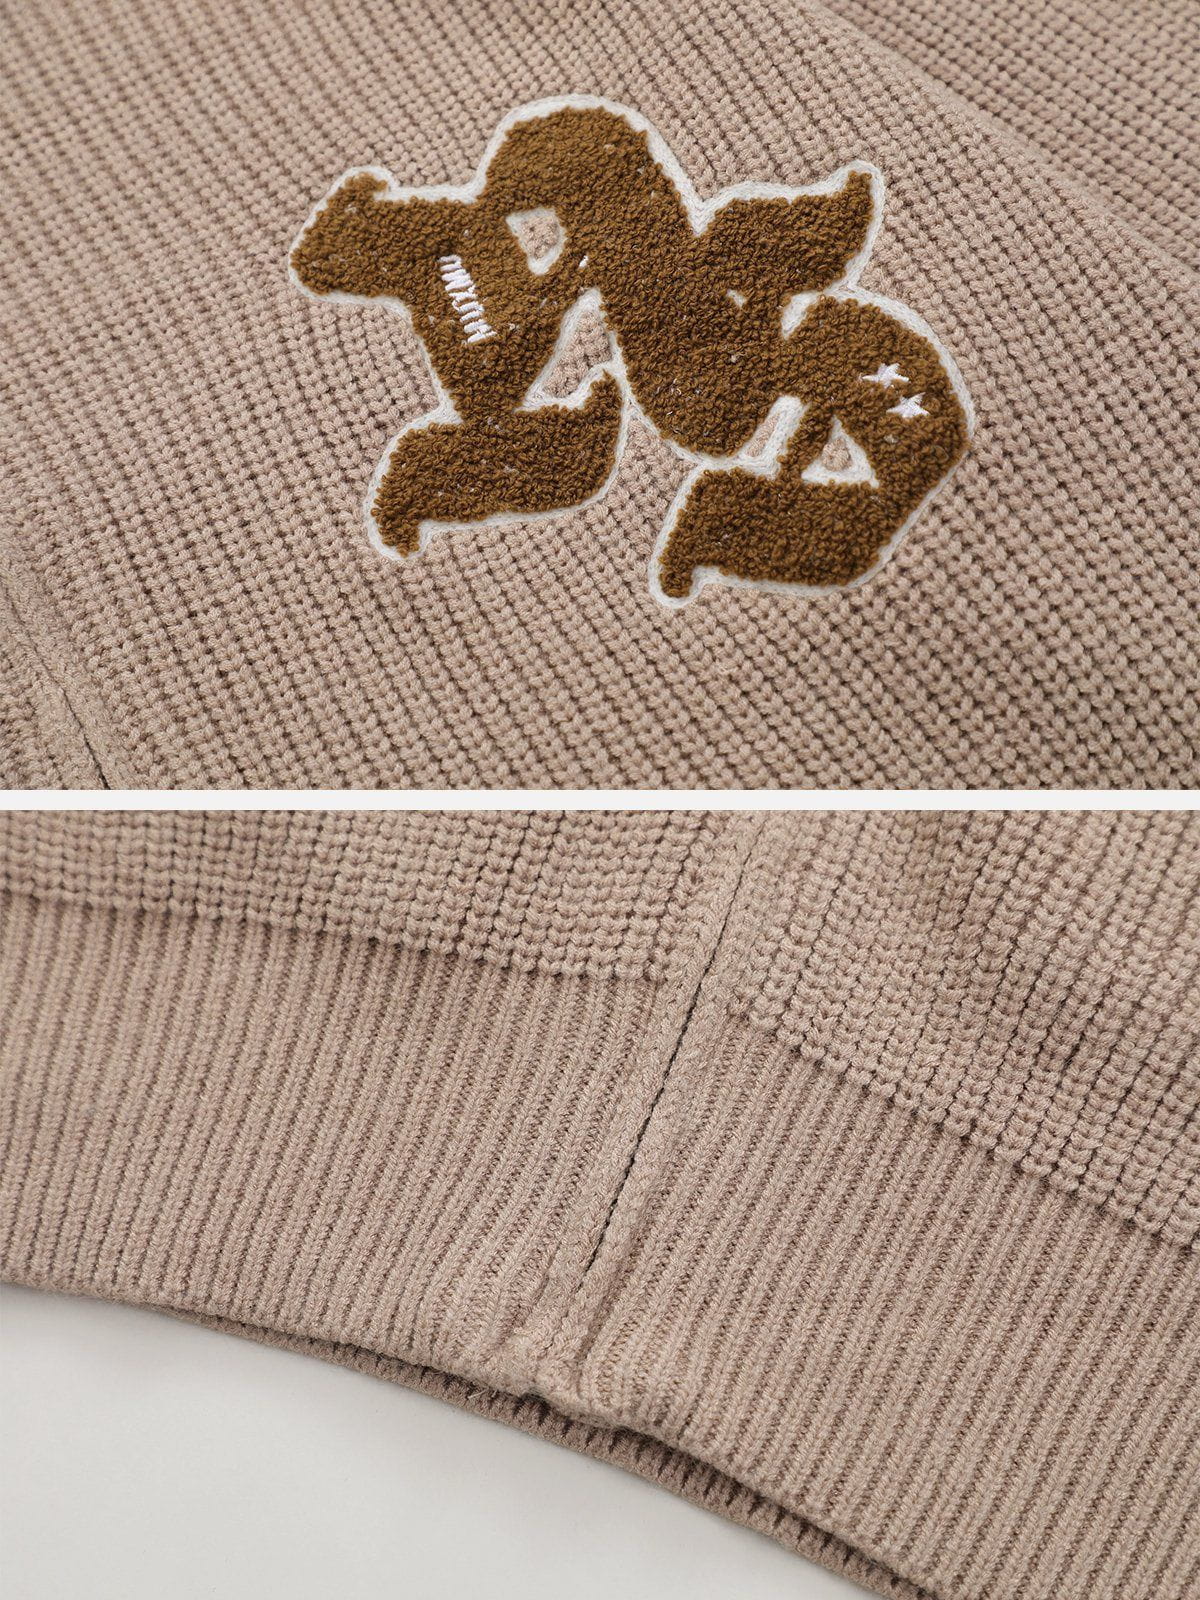 Sneakerland® - Gothic Alphabet Embroidery Cardigan